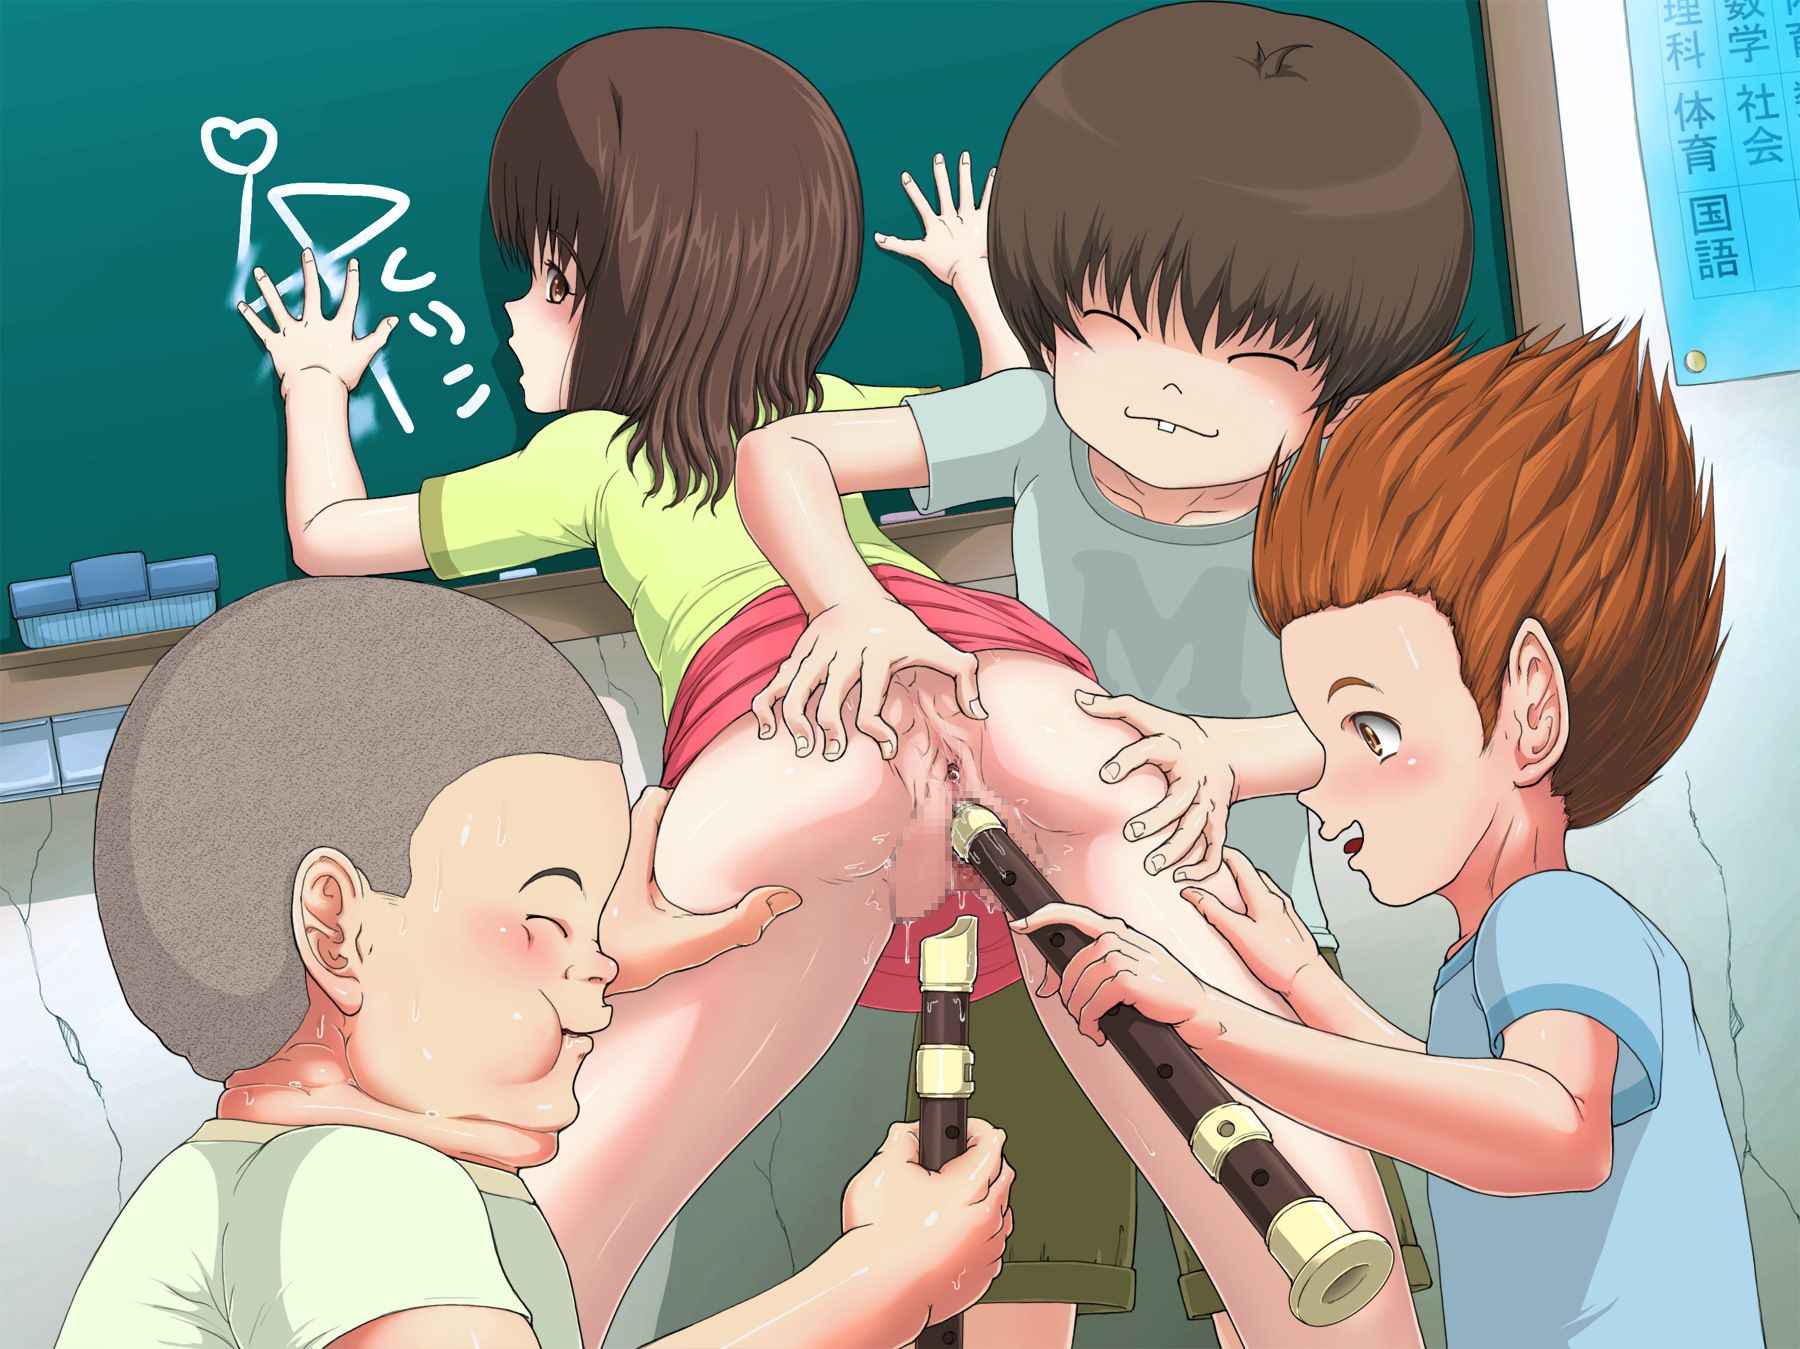 [Secondary erotic] Erotic image summary Loli x Shota with each other children 21